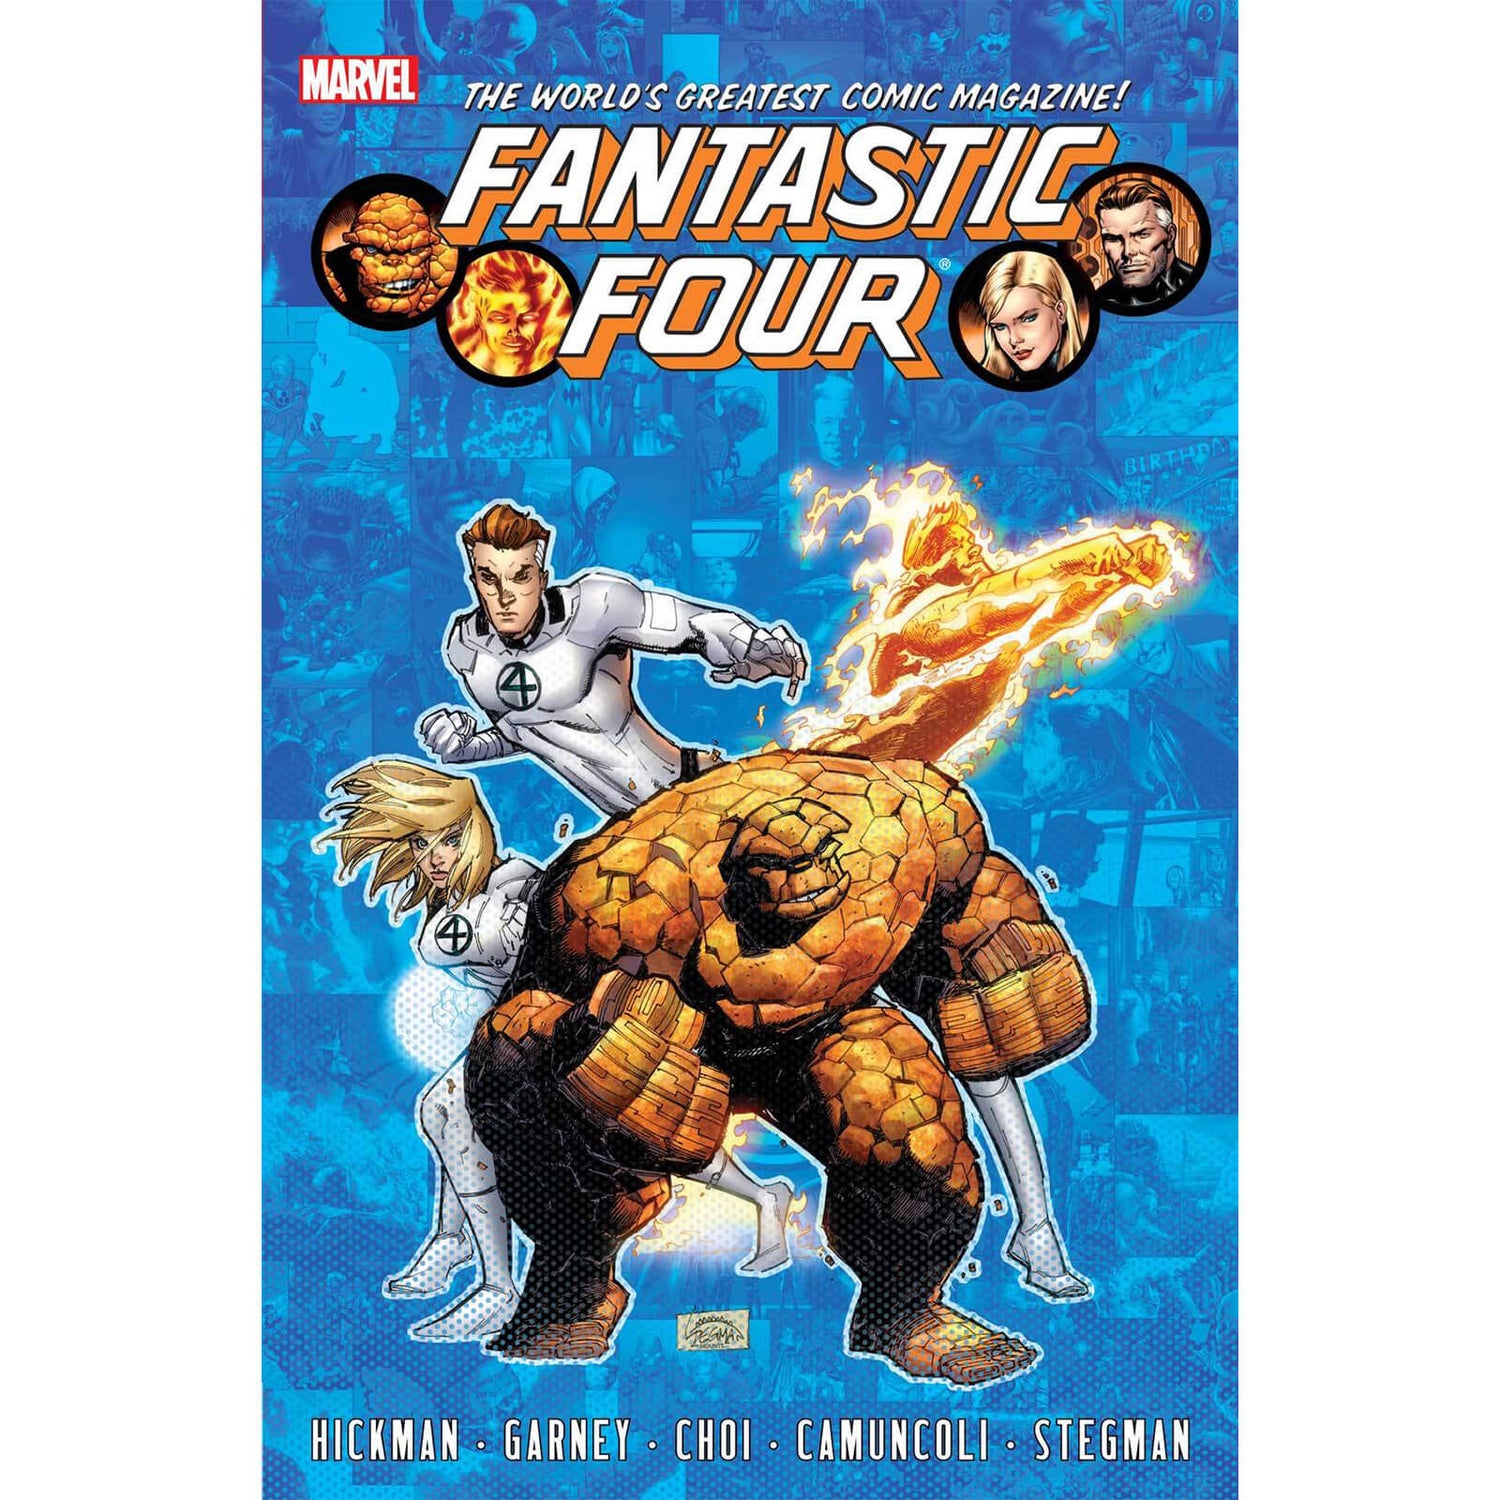 Marvel Fantastic Four by Jonathan Hickman - Volume 6 Paperback Graphic Novel